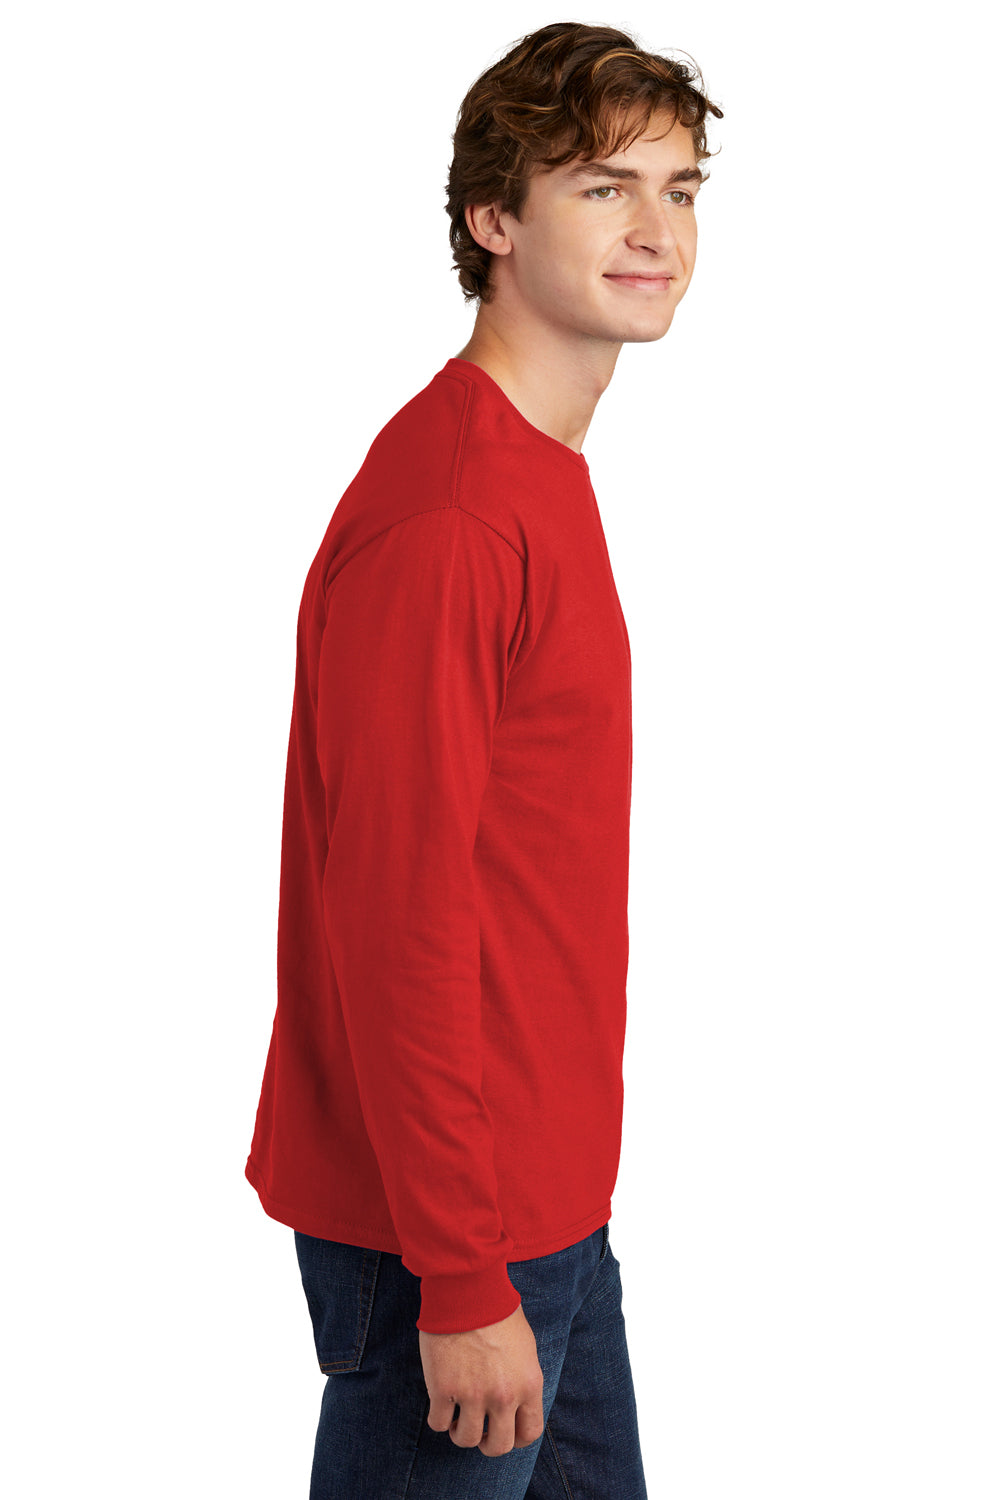 Hanes 5286 Mens ComfortSoft Long Sleeve Crewneck T-Shirt Athletic Red Side